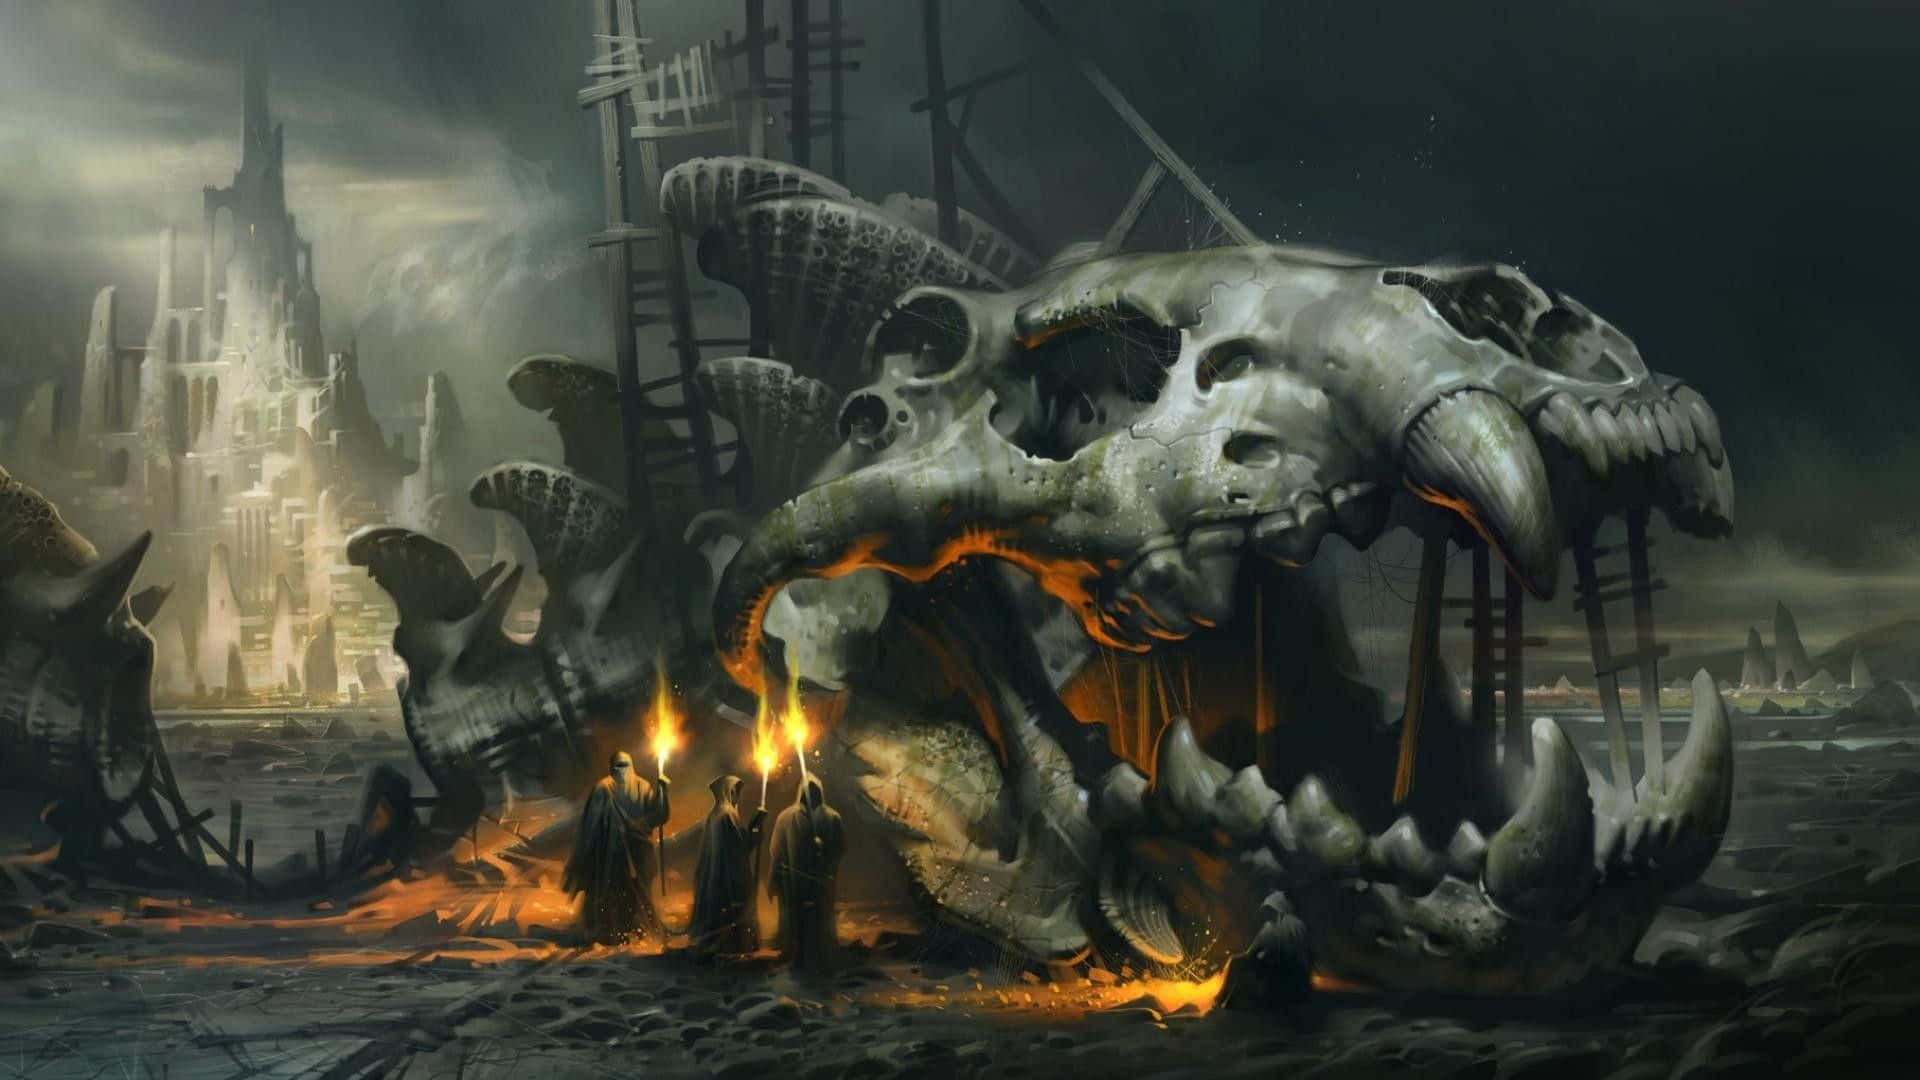 A Dark Fantasy Scene With A Skull And A City